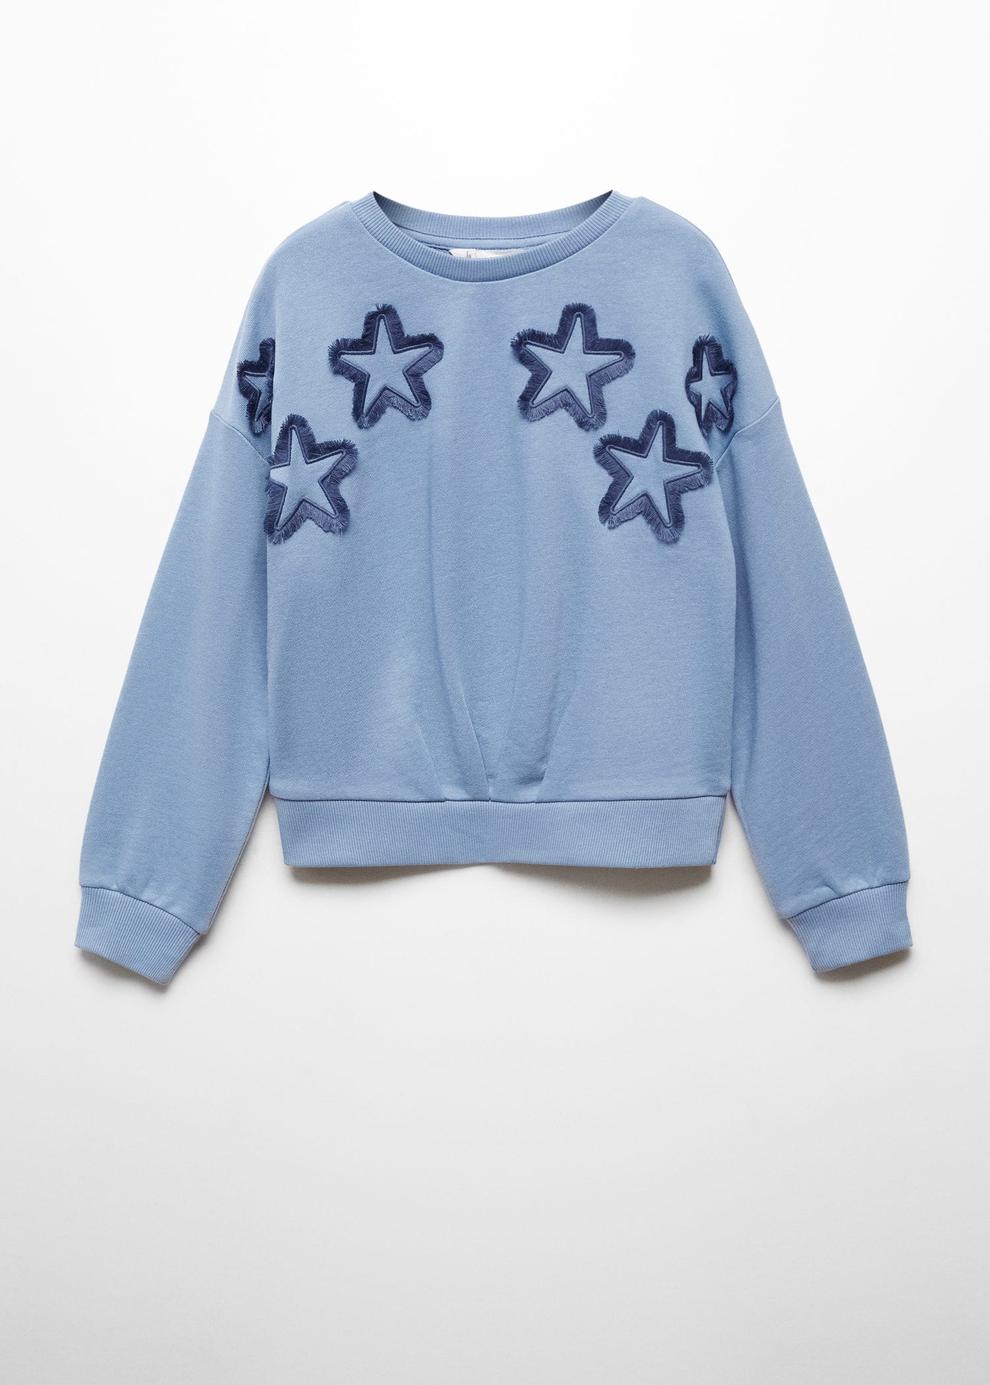 Star sweatshirt offers at S$ 49.9 in Mango Kids